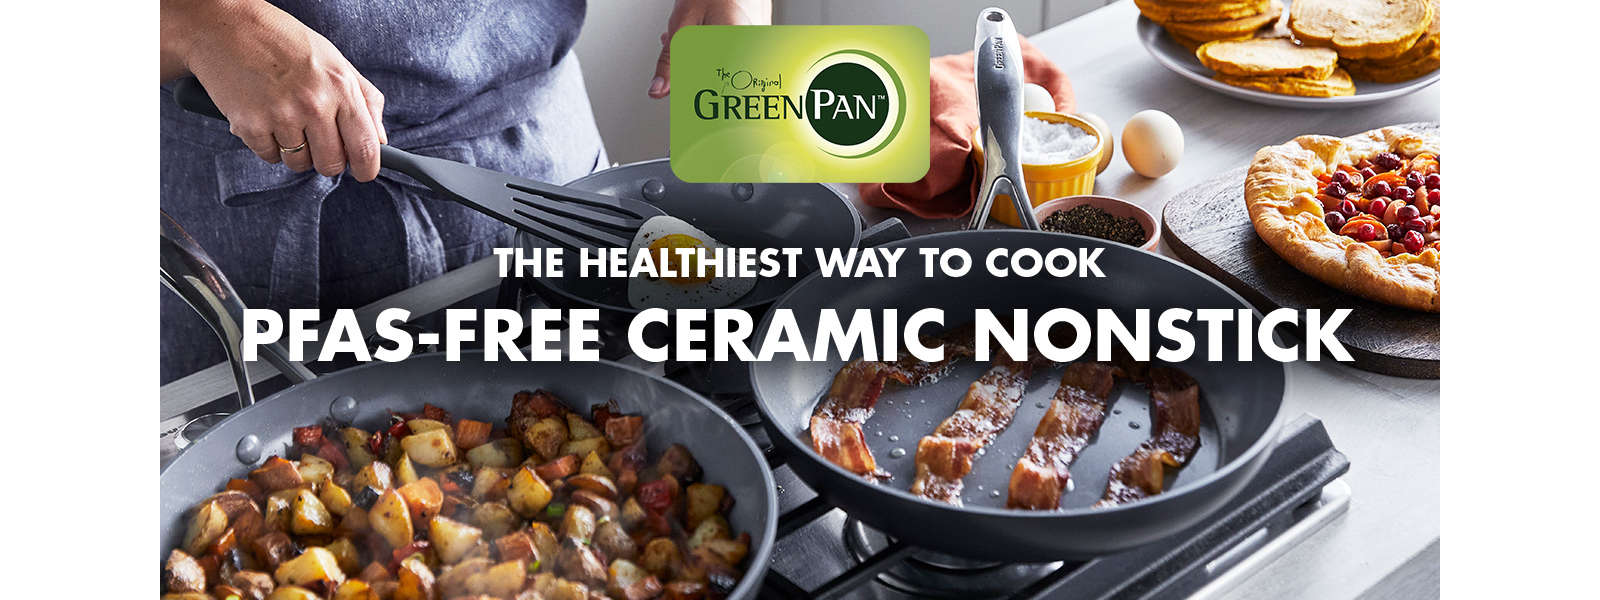 GreenPan Healthy Ceramic Nonstick, 2QT Rice Grains and Soup Maker